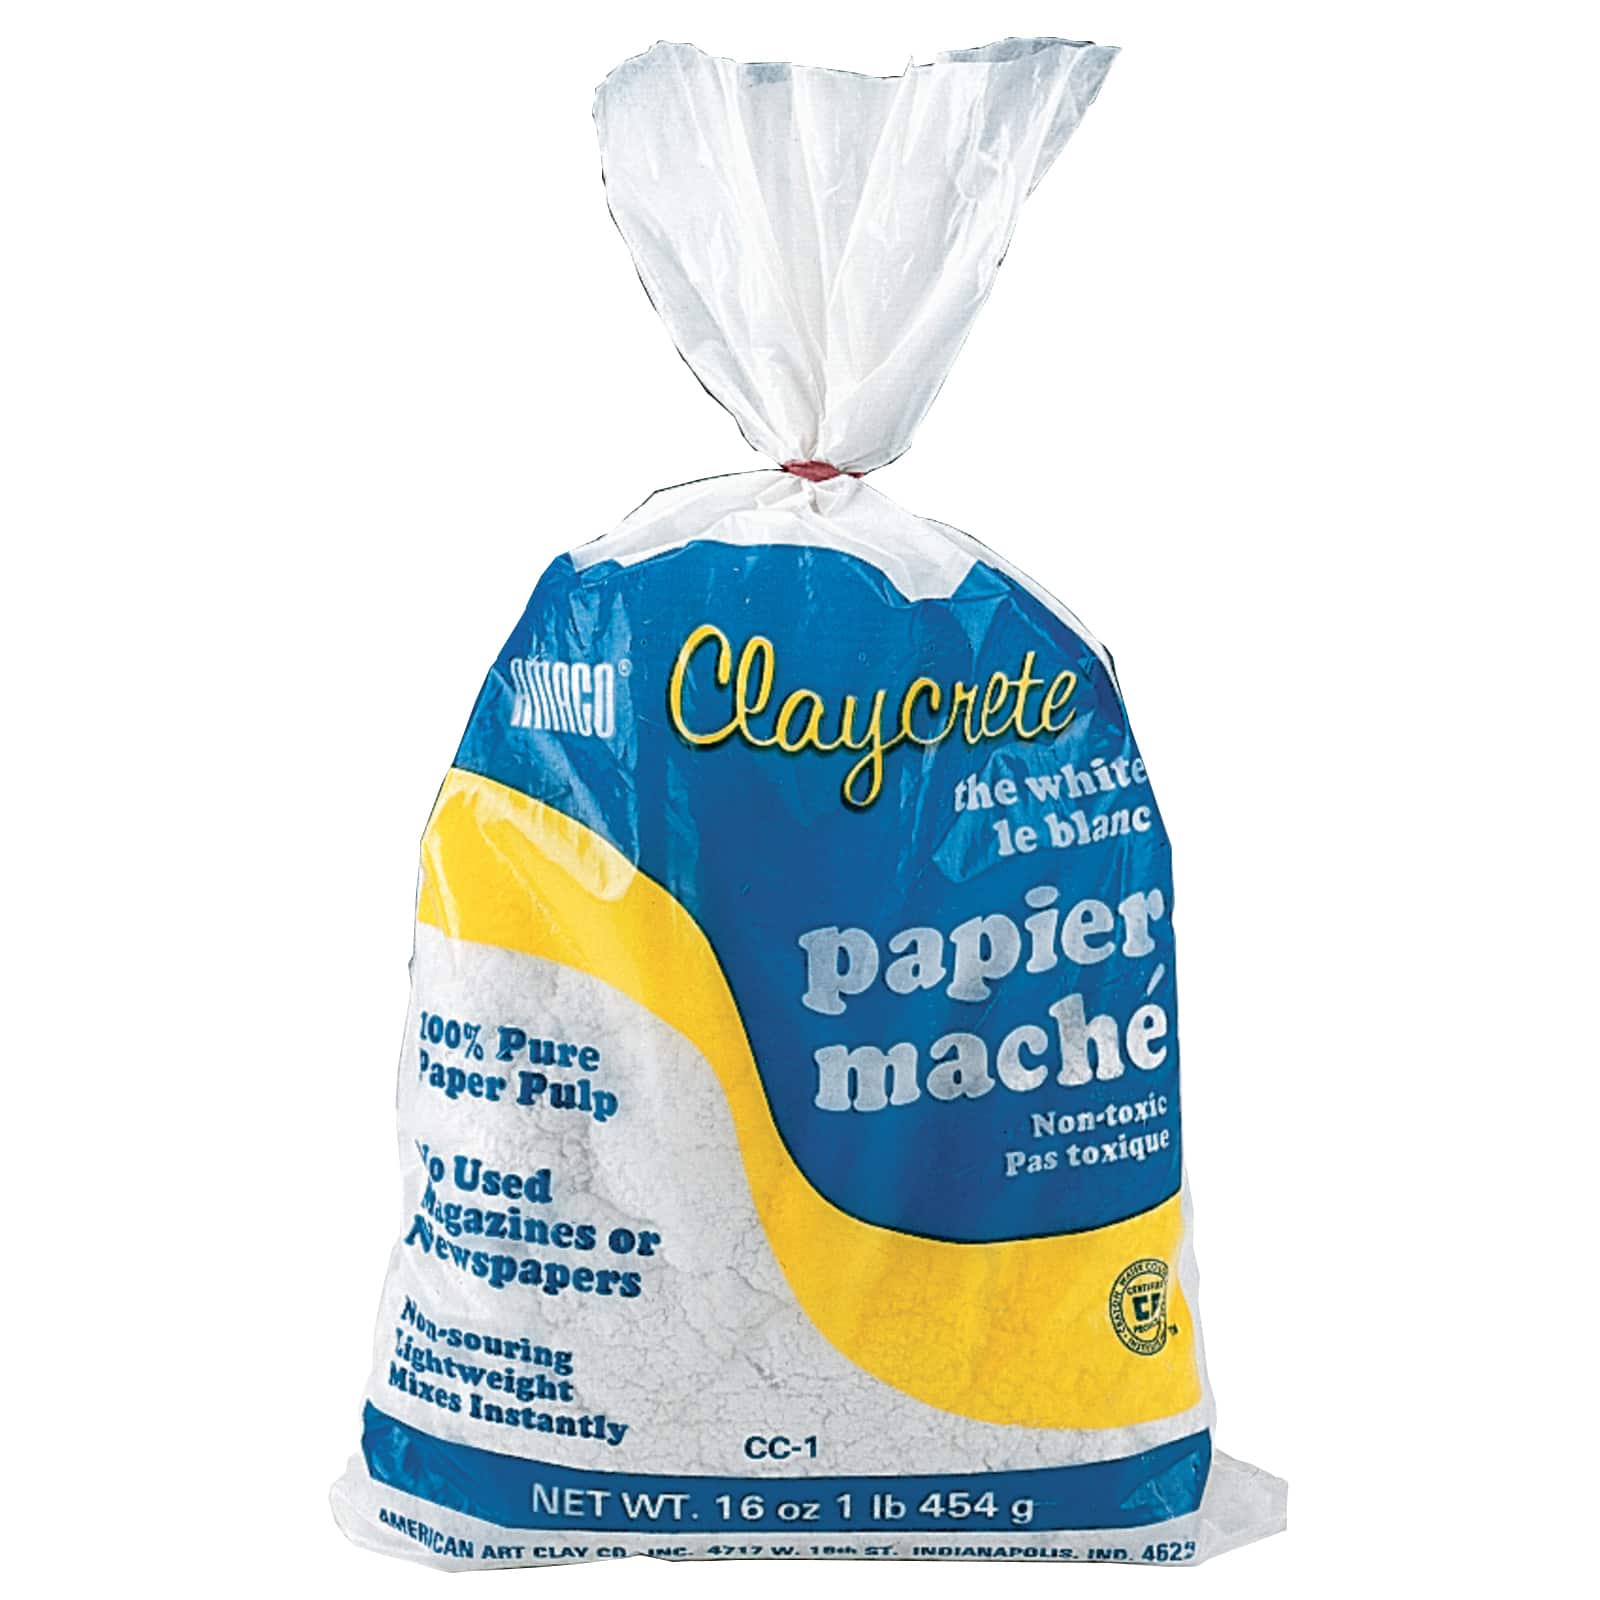 12 Pack: Amaco Claycrete Papier Mache